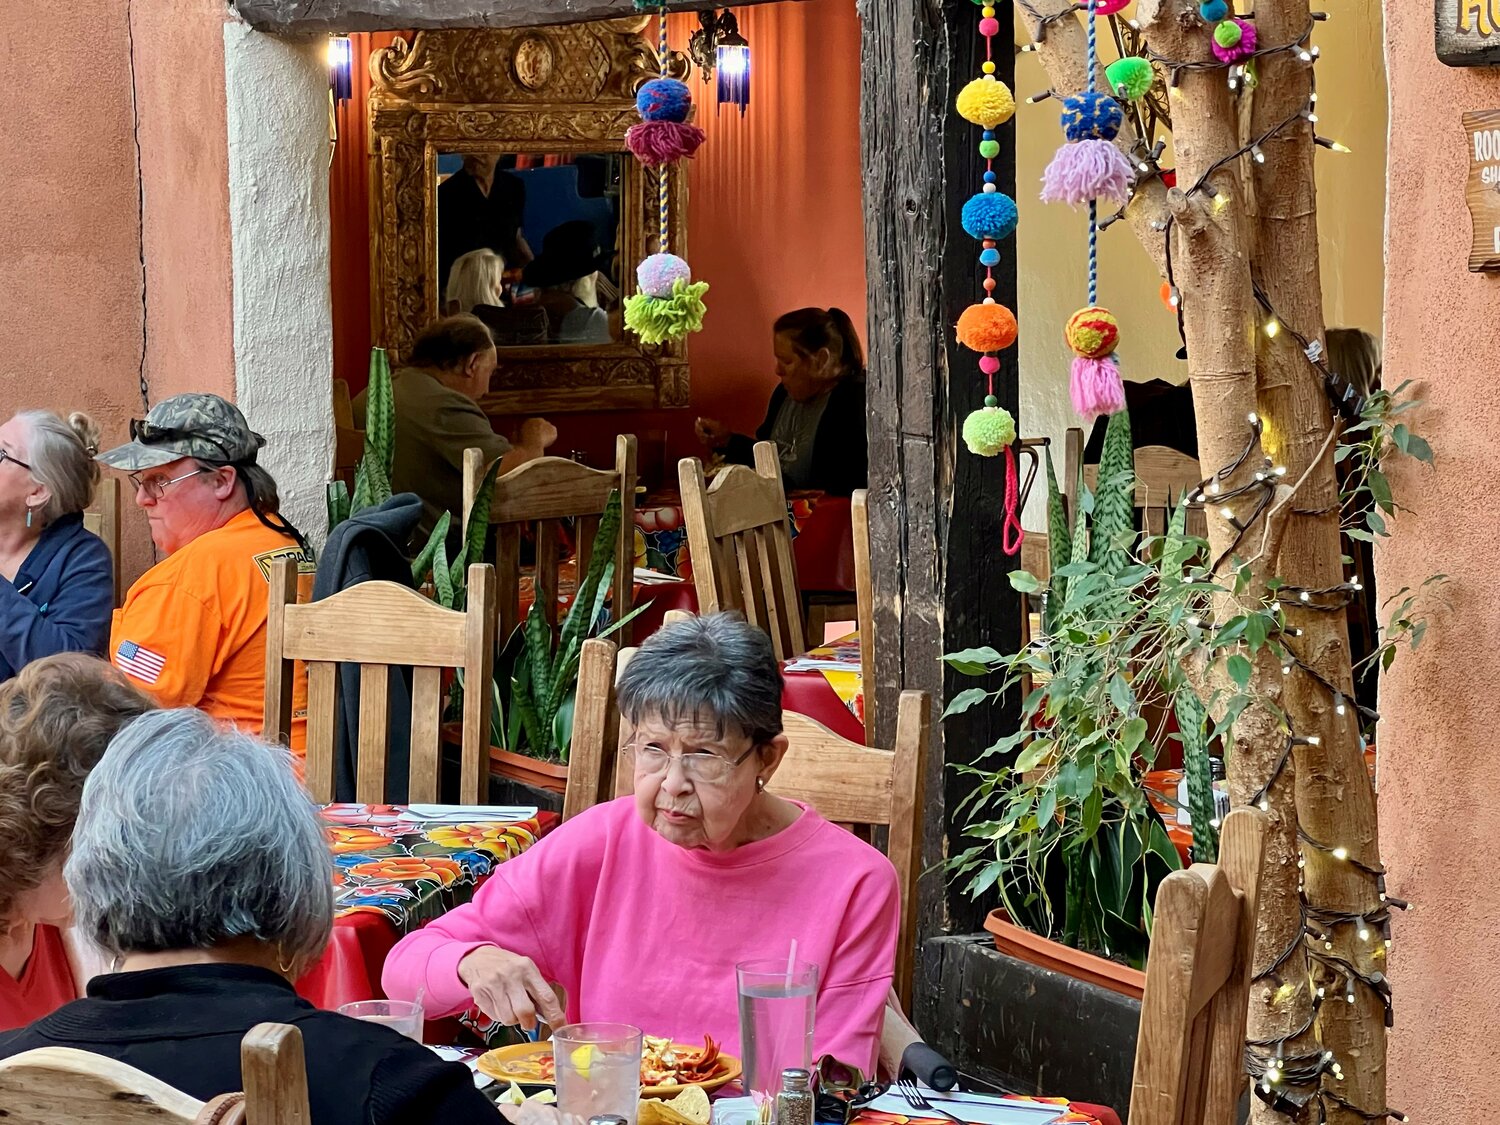 Customers eat lunch at La Posta de Mesilla on Jan. 16.